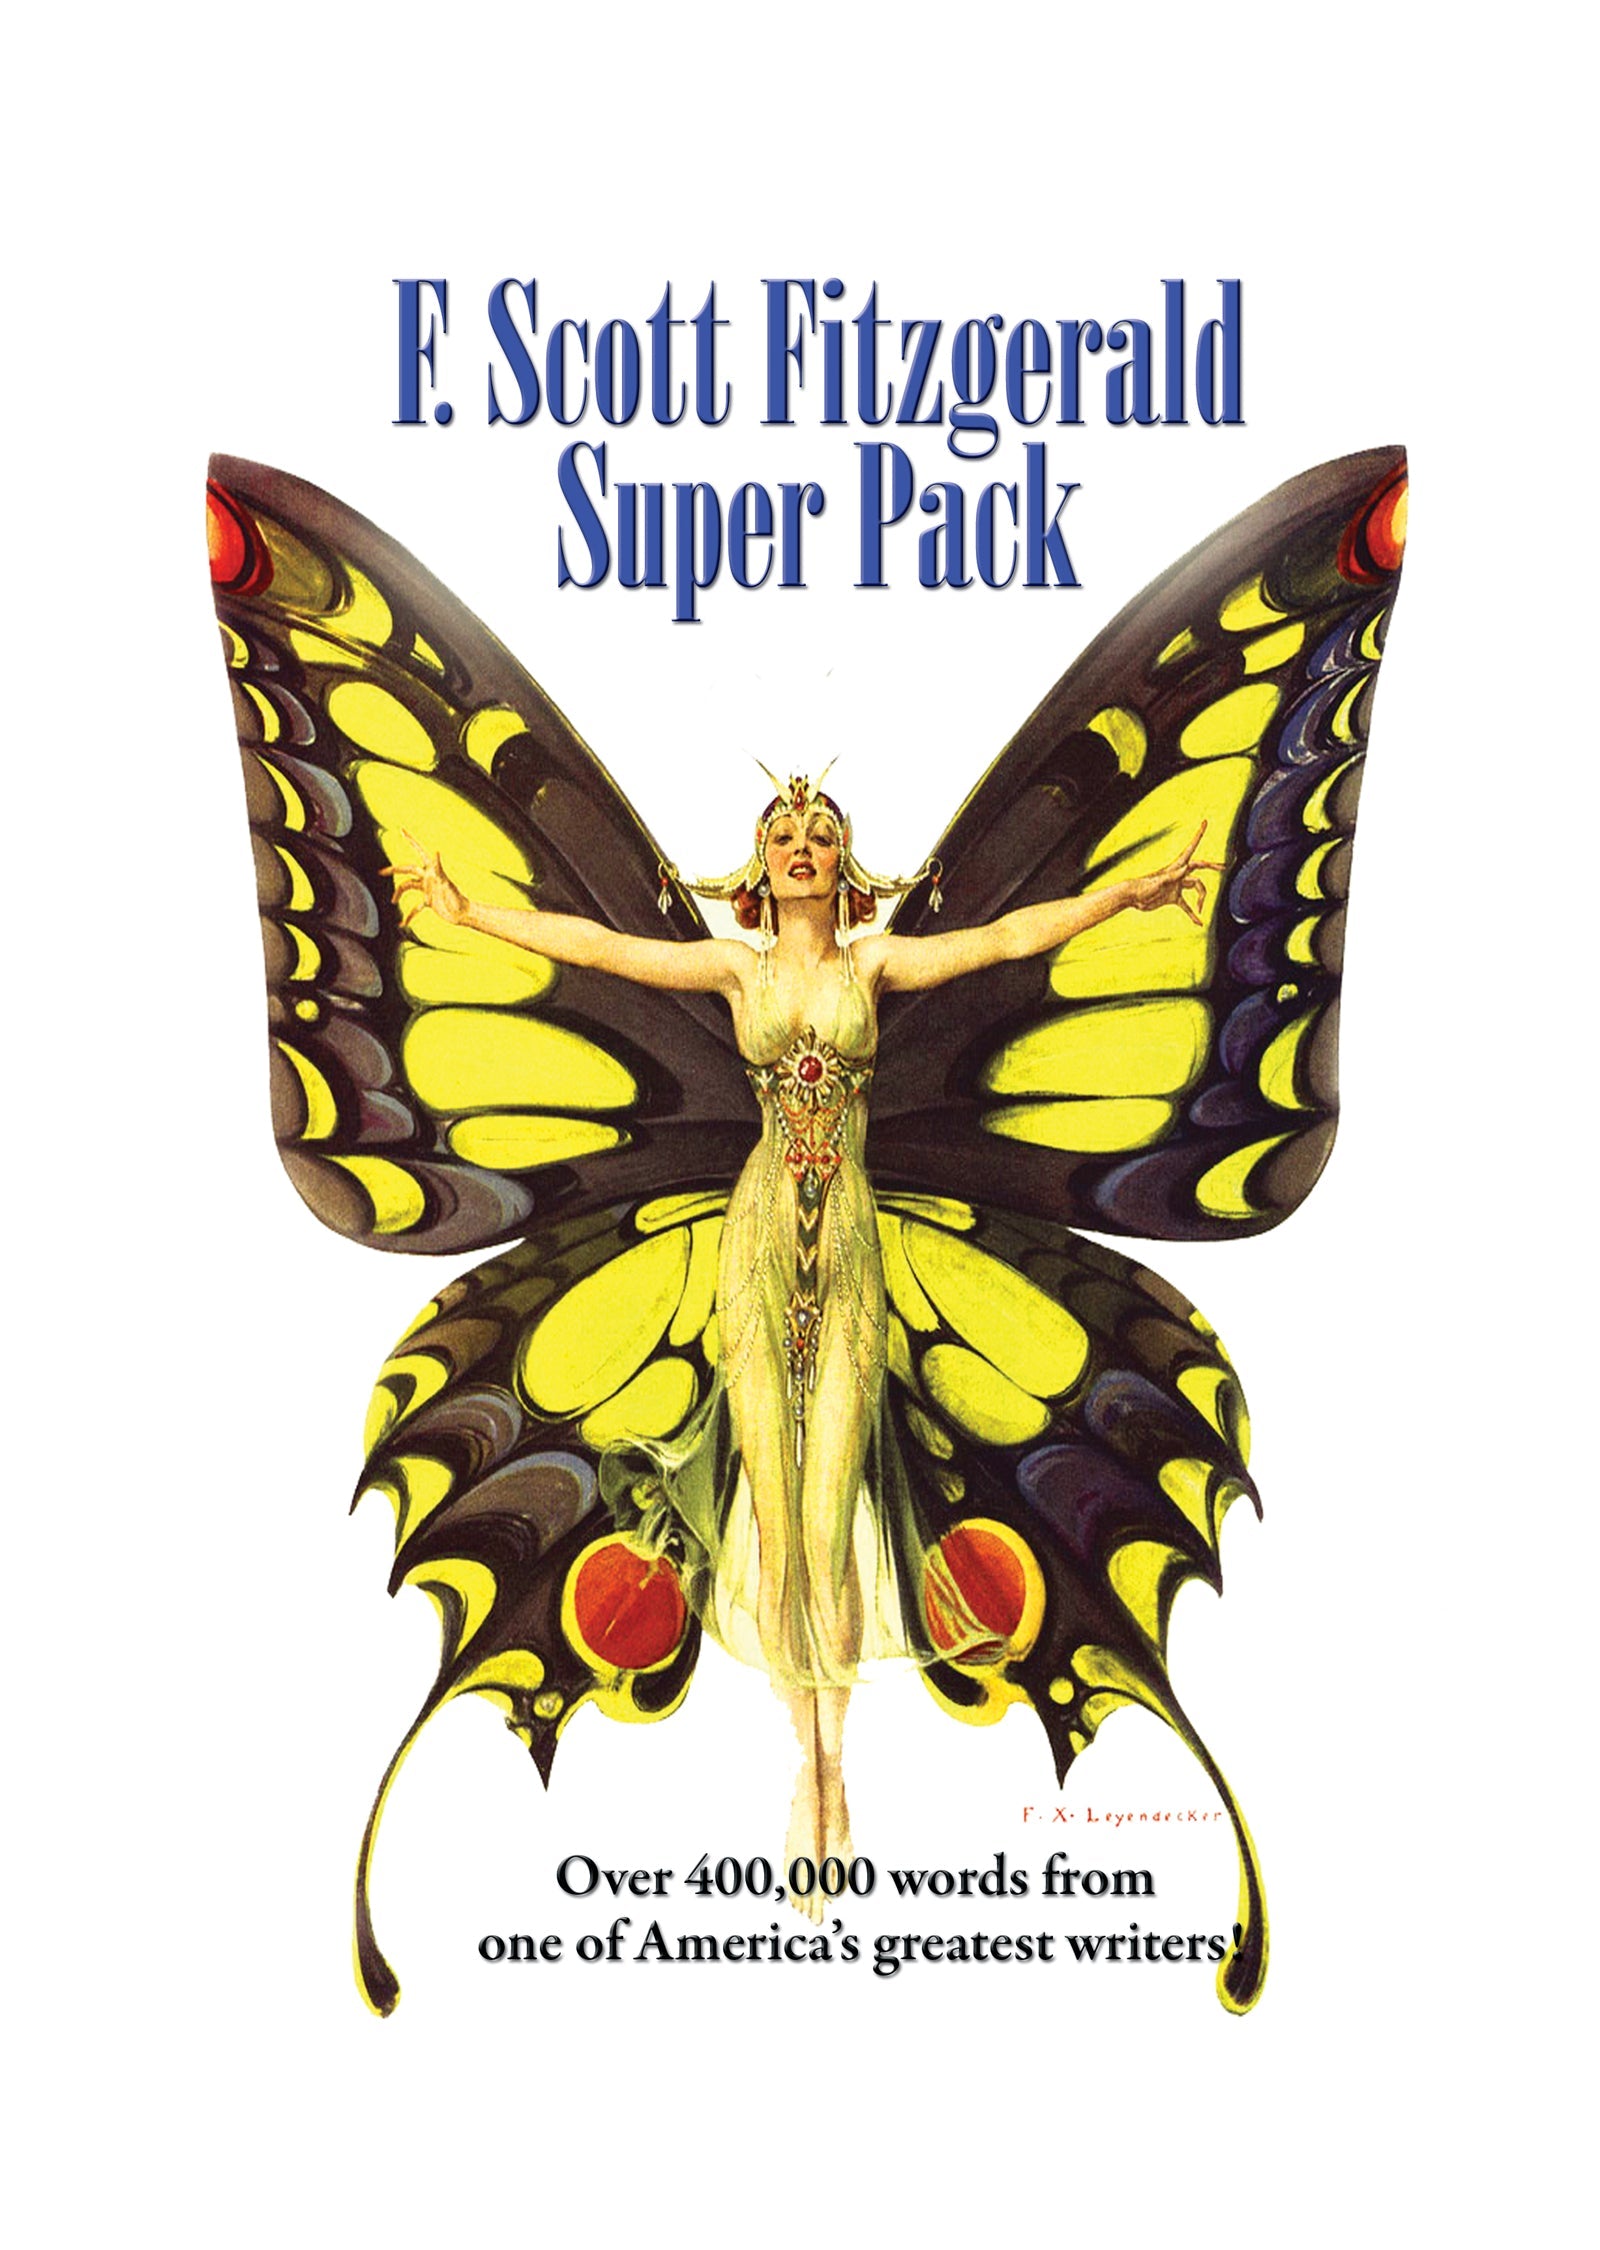 Cover art for the F. Scott Fitzgerald Super Pack